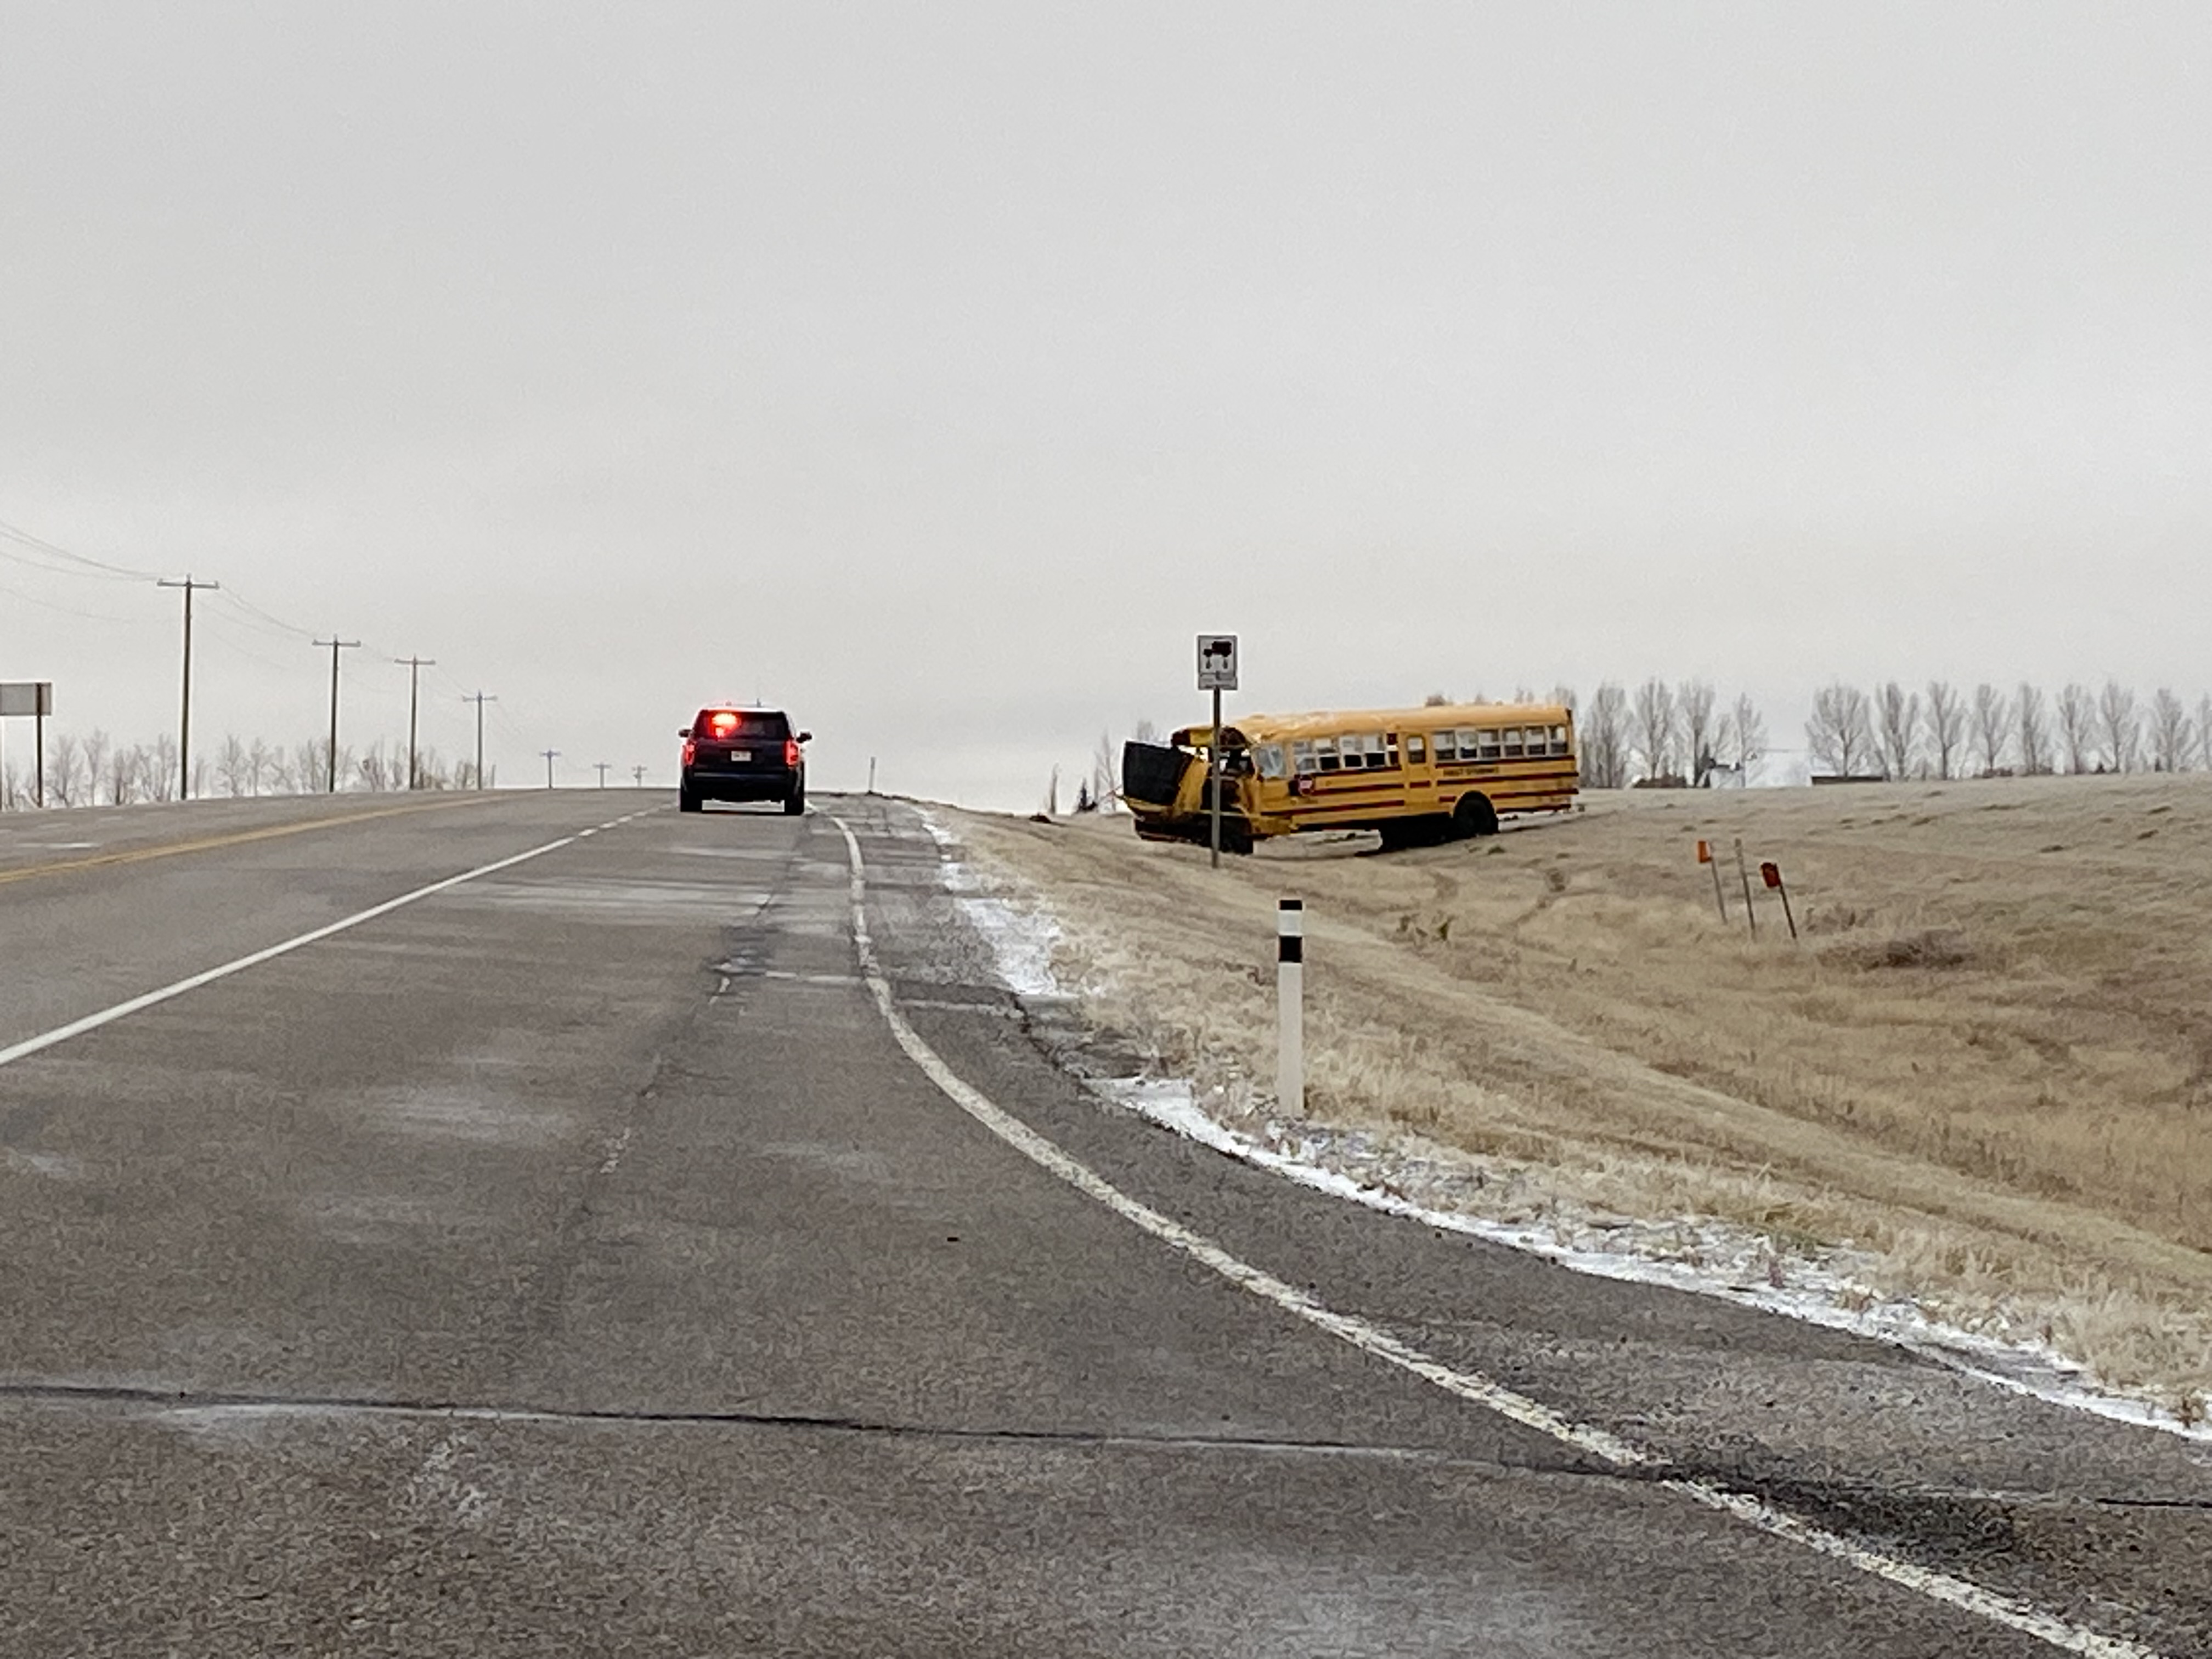 5 children, 1 adult injured in school bus crash on highway north of Calgary